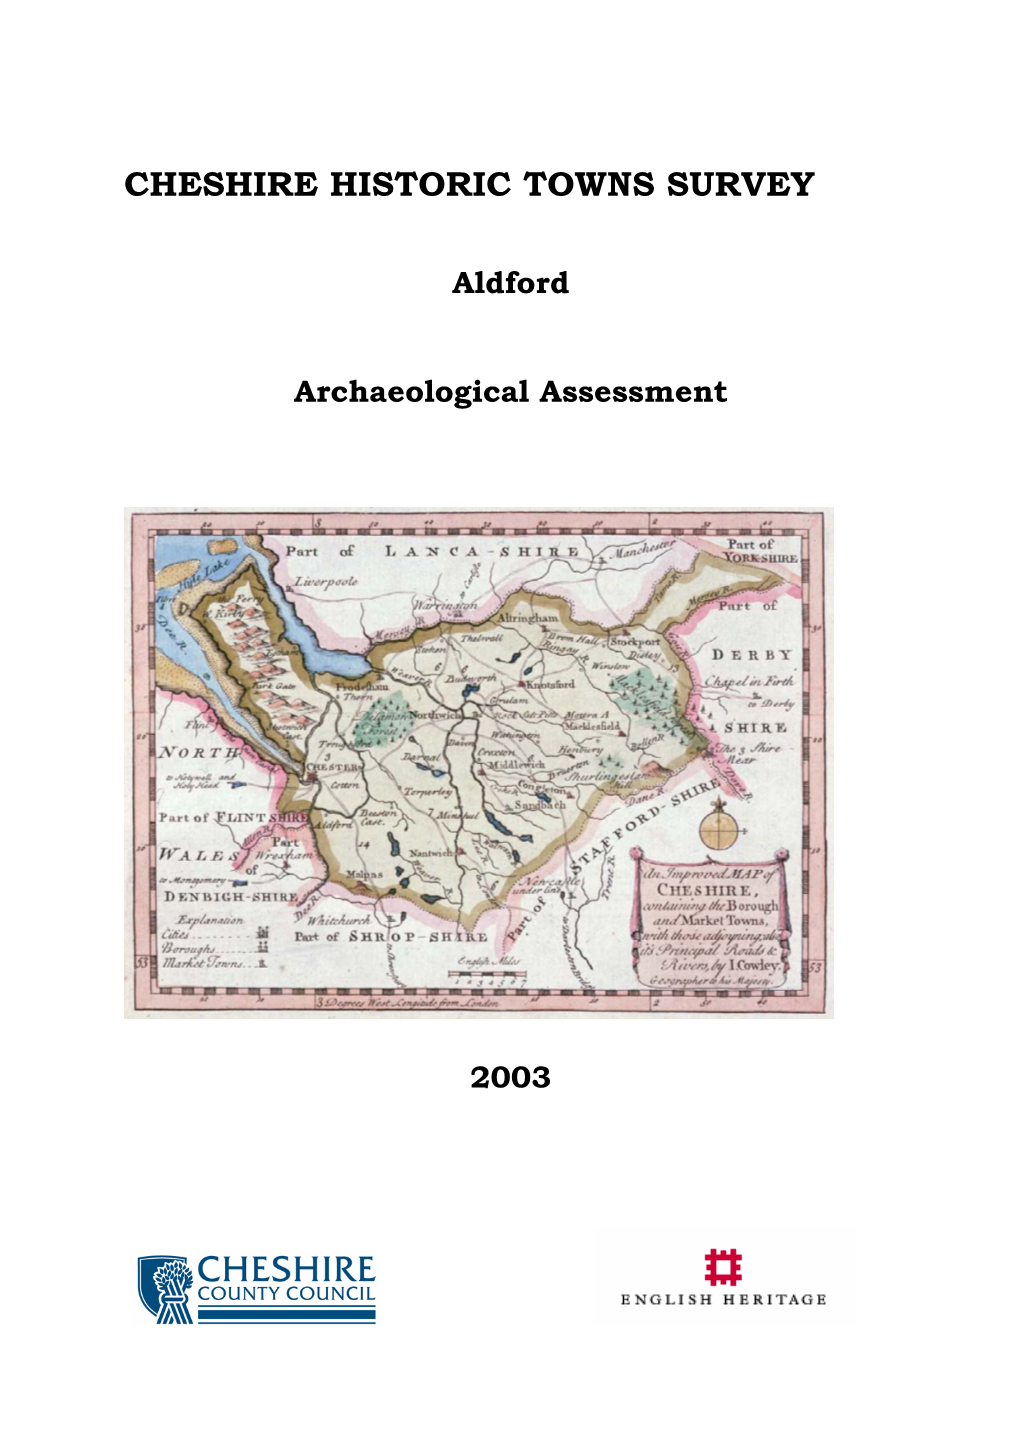 Aldford Archaeological Assessment